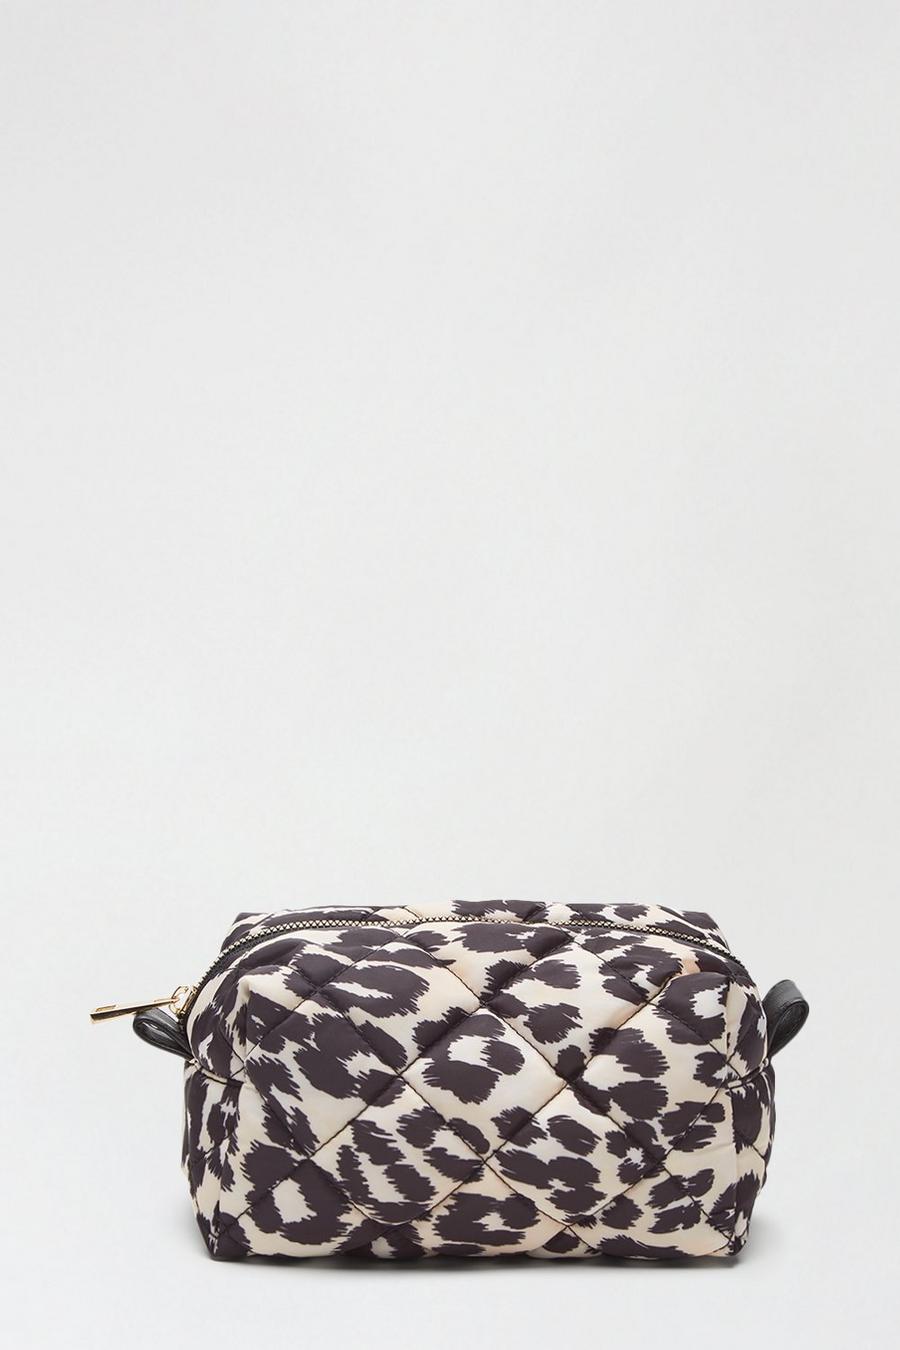 Leopard Print Quilted Makeup Bag